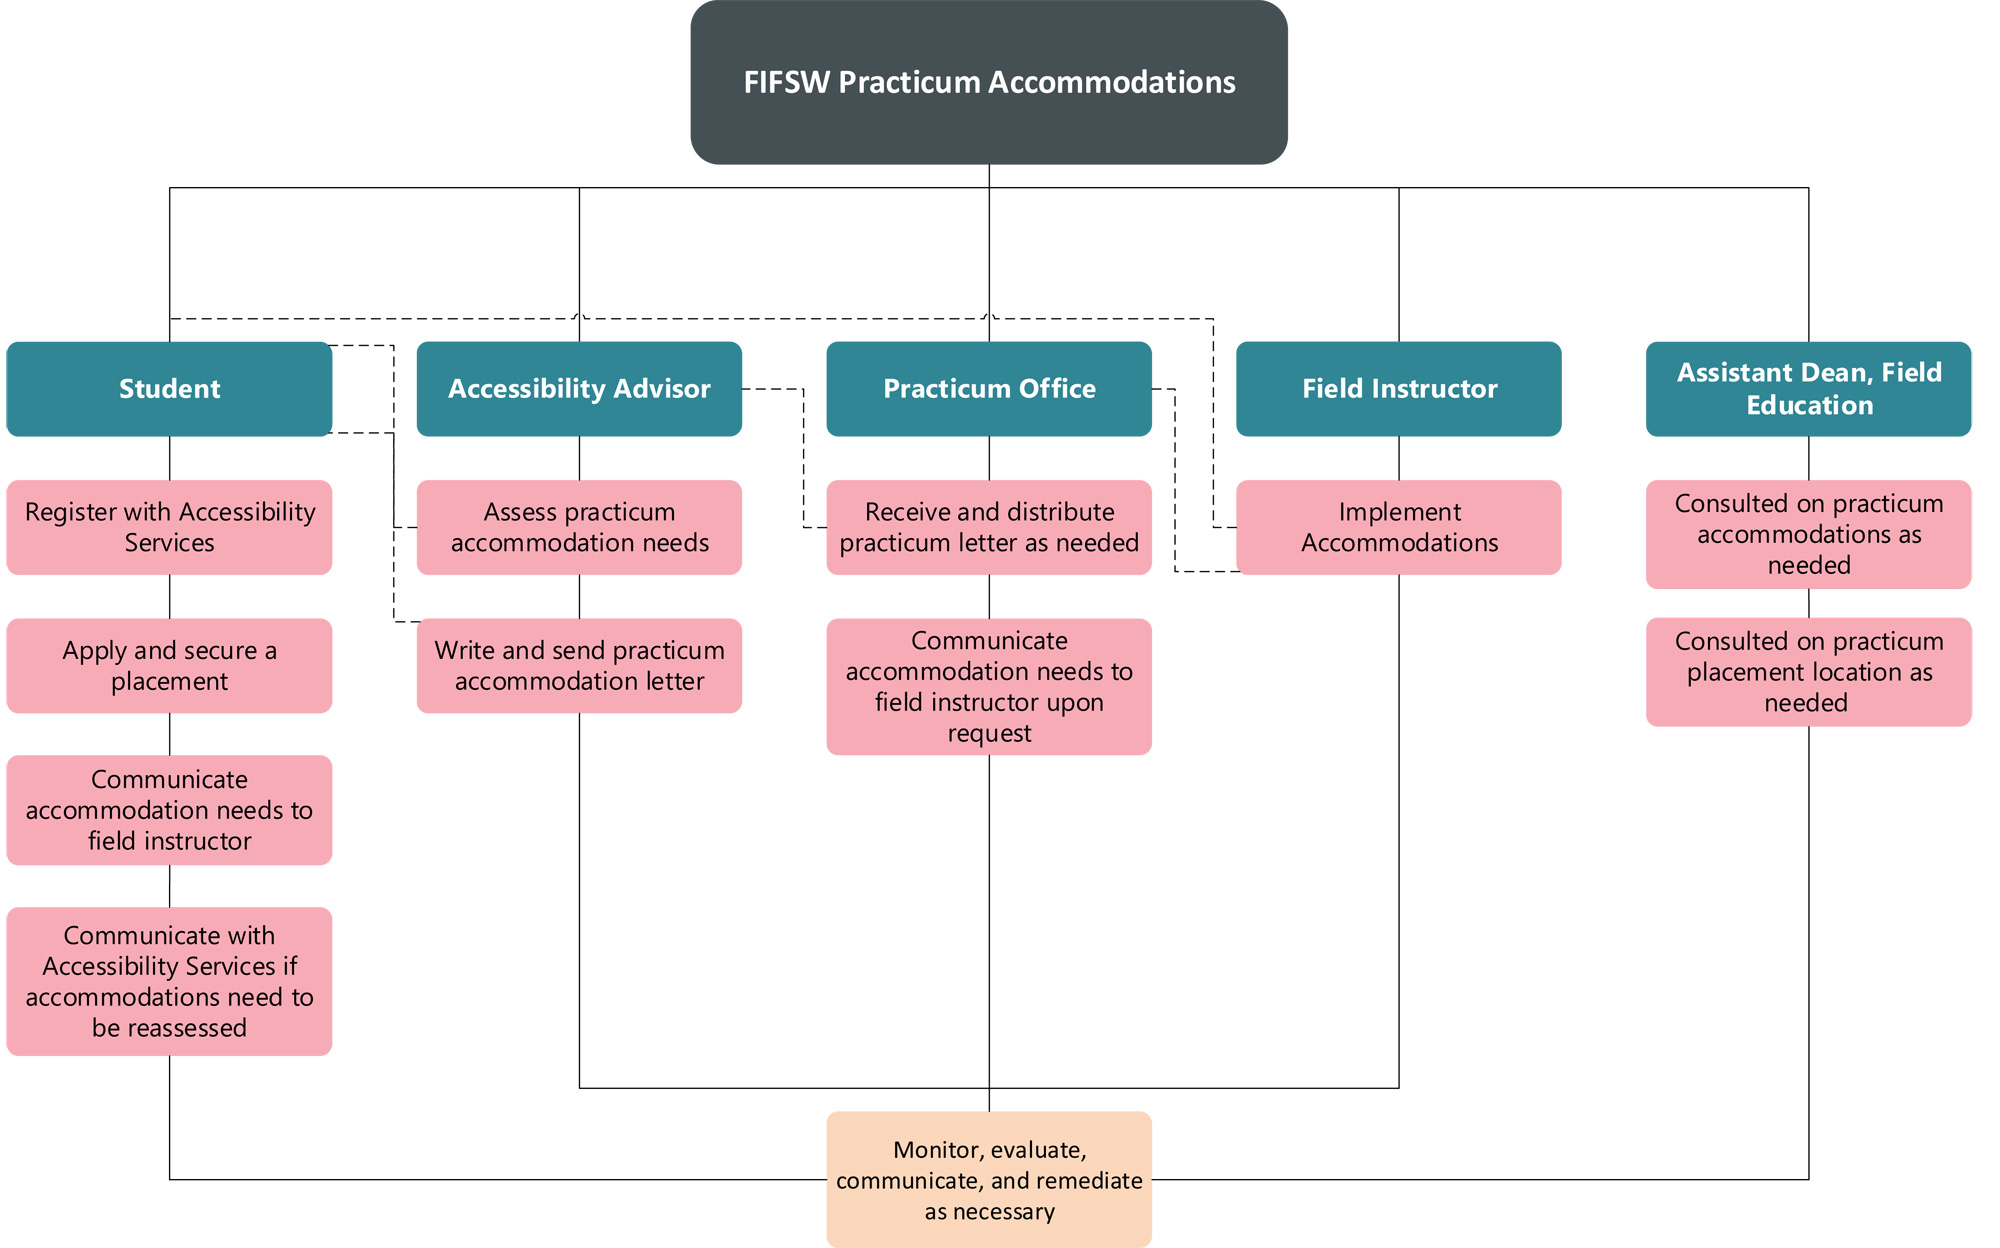 FIFSW Practicum accommodations roles diagram